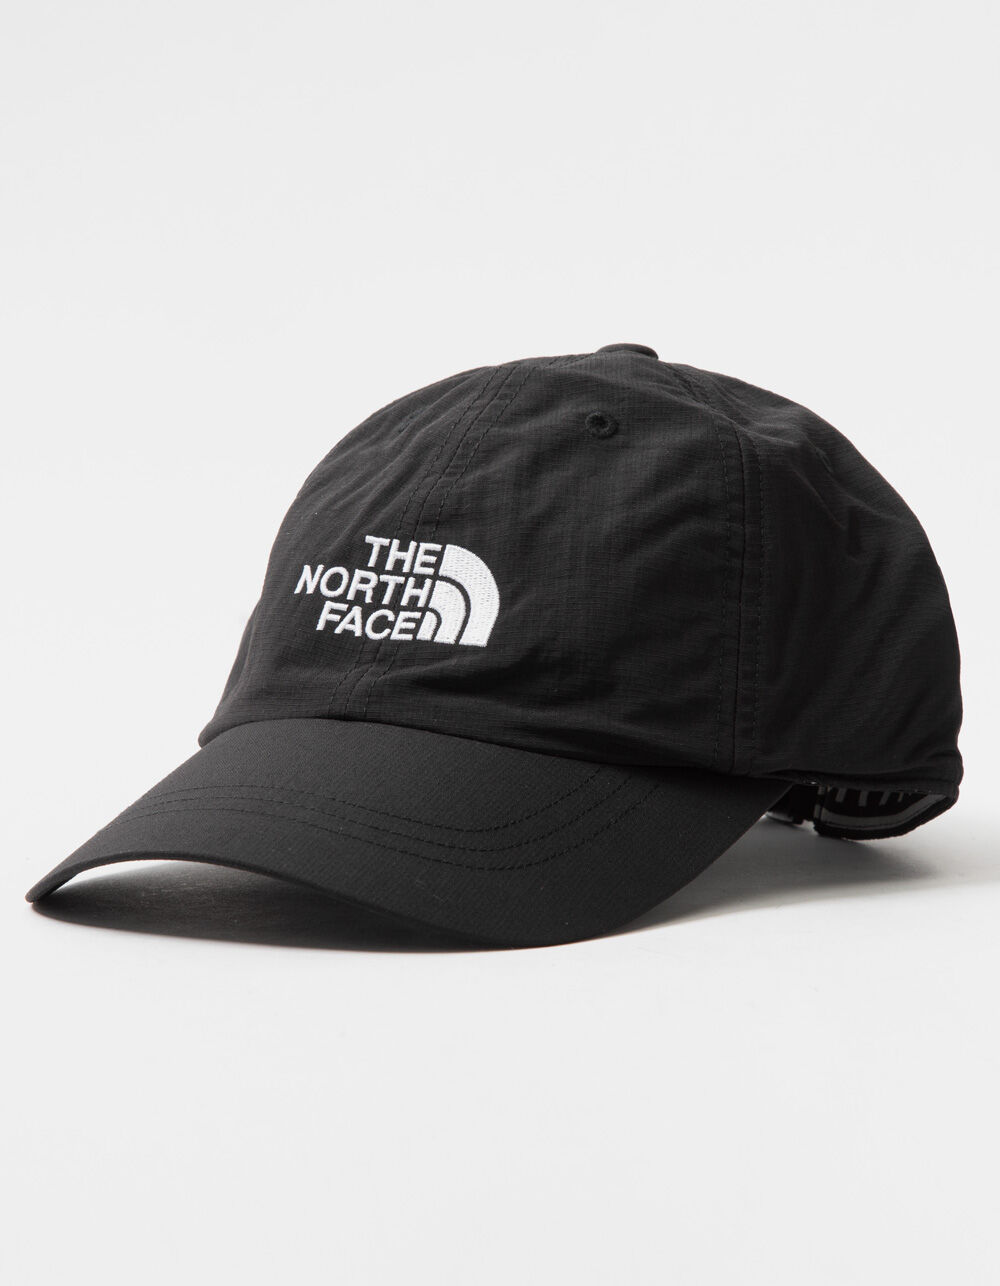 THE NORTH FACE Horizon Mens Strapback Hat - BLACK - 404538100